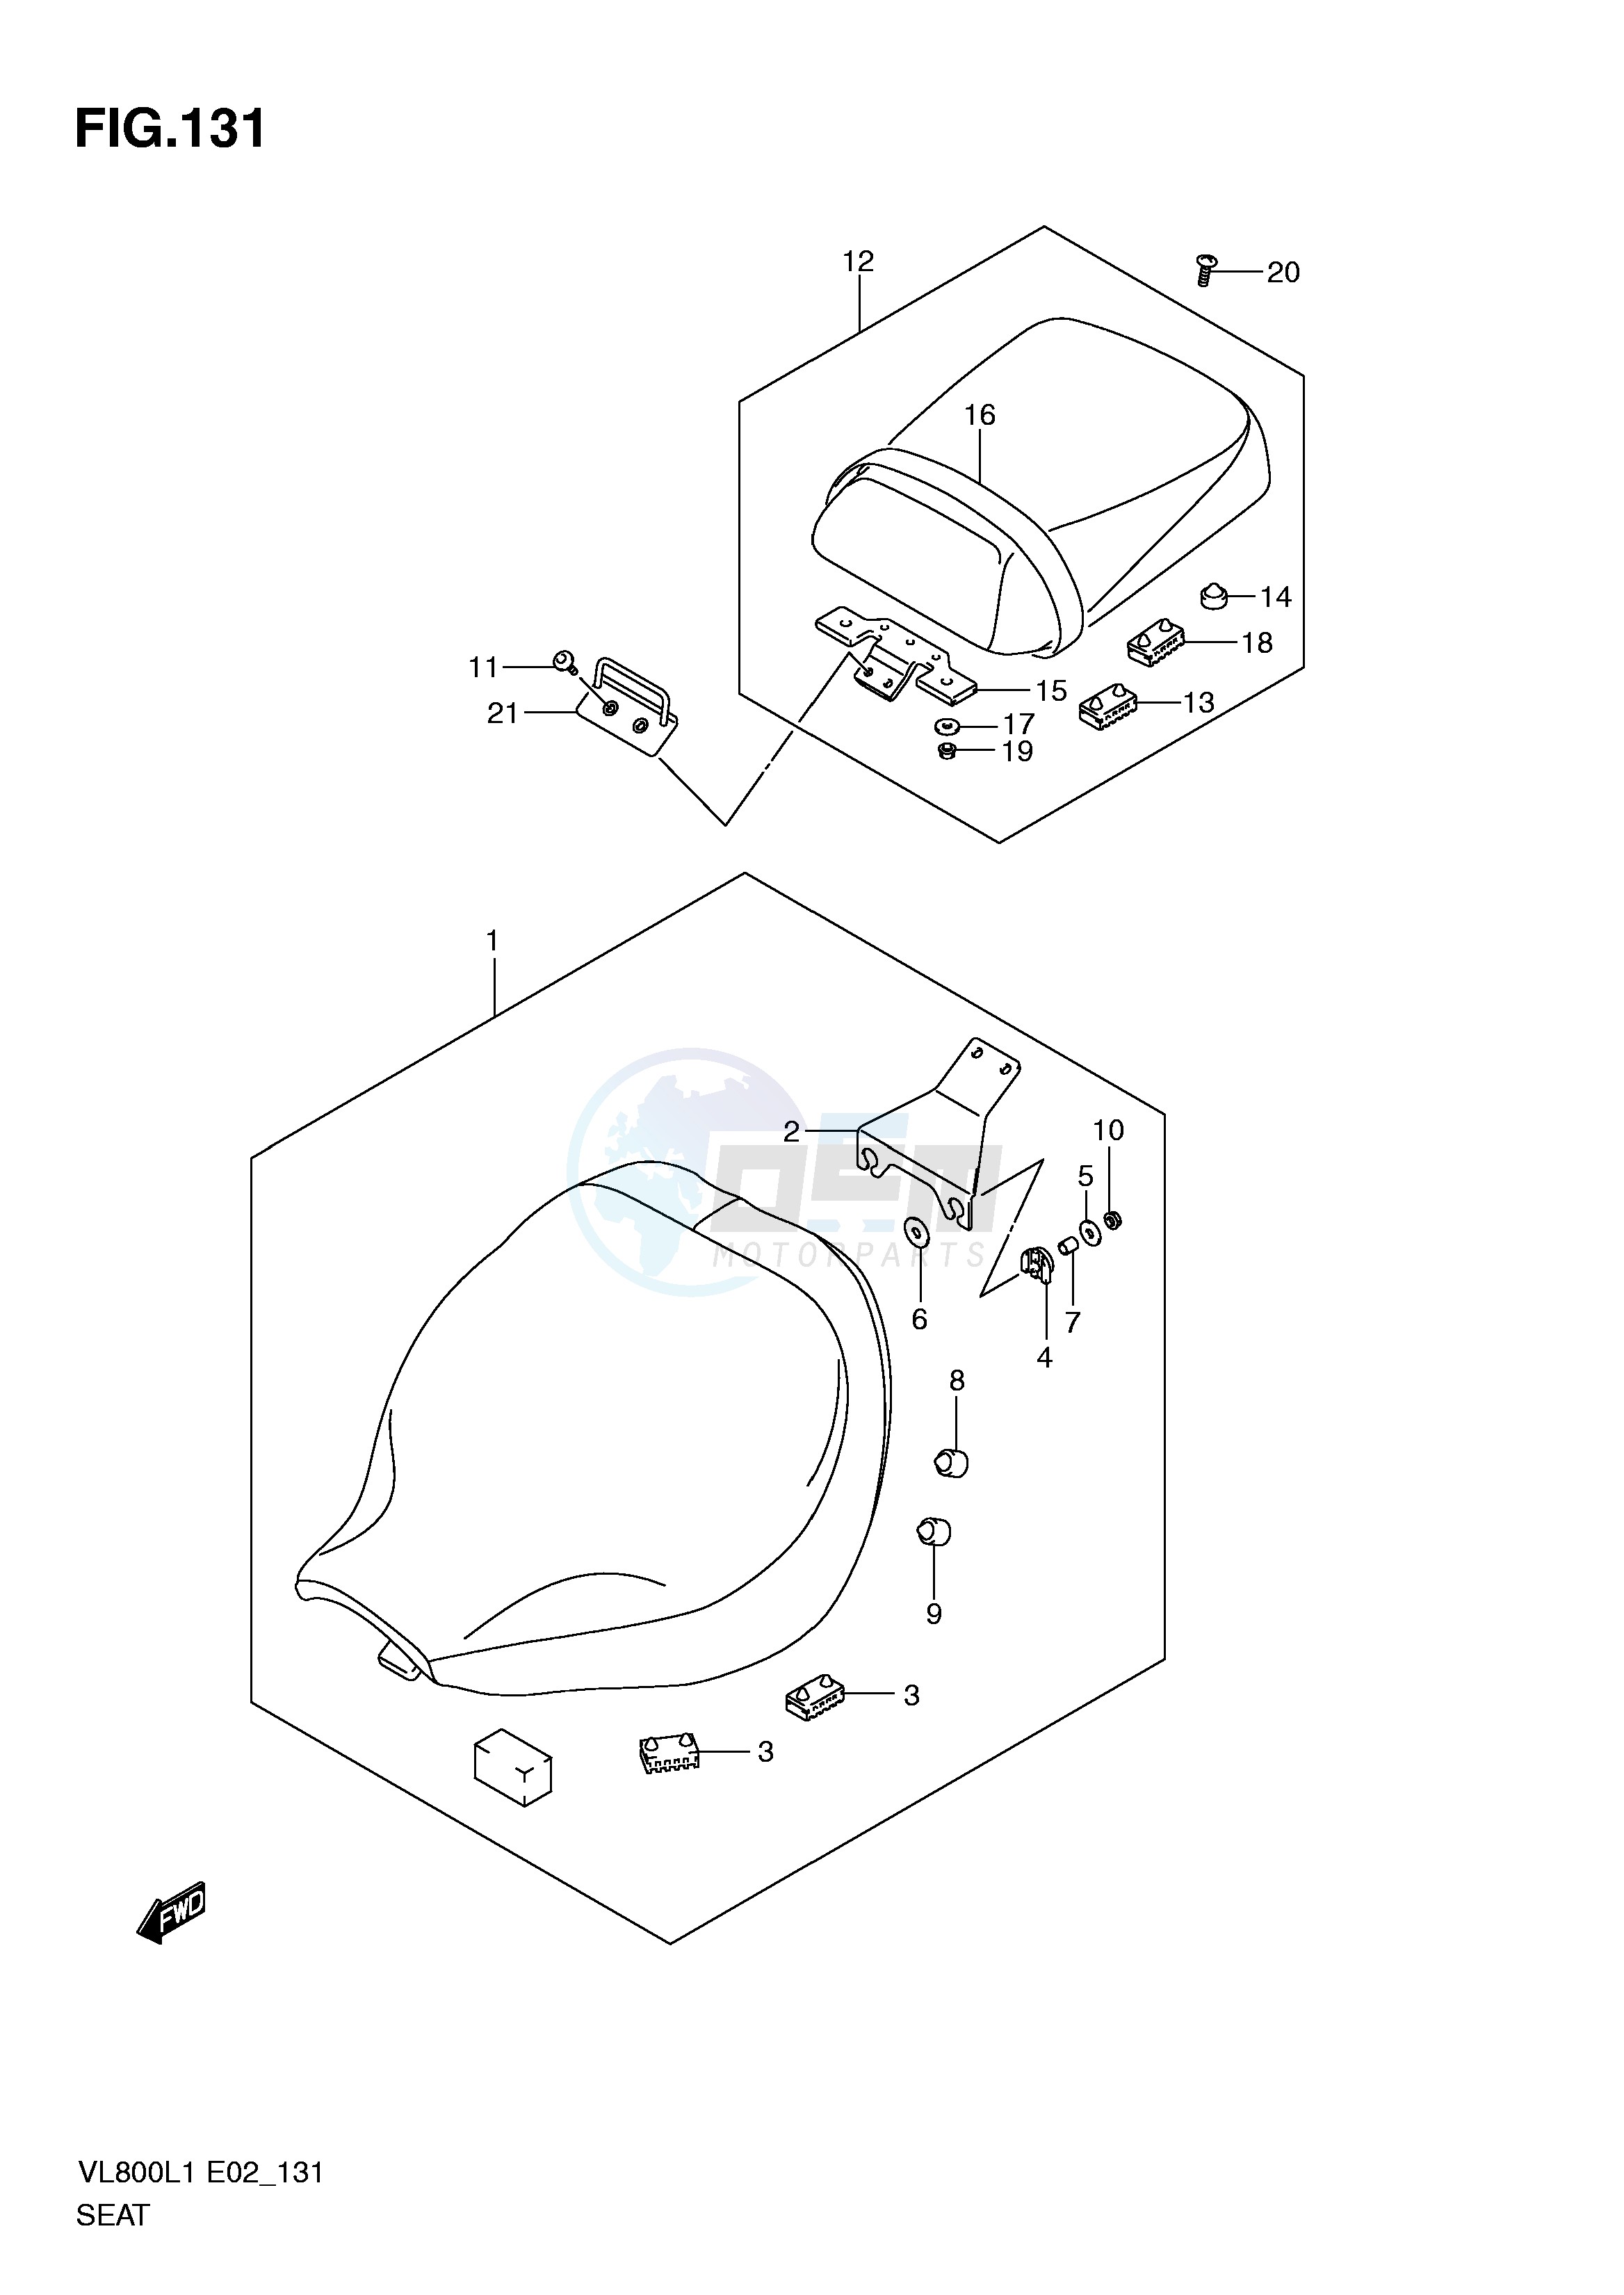 SEAT (VL800L1 E24) blueprint